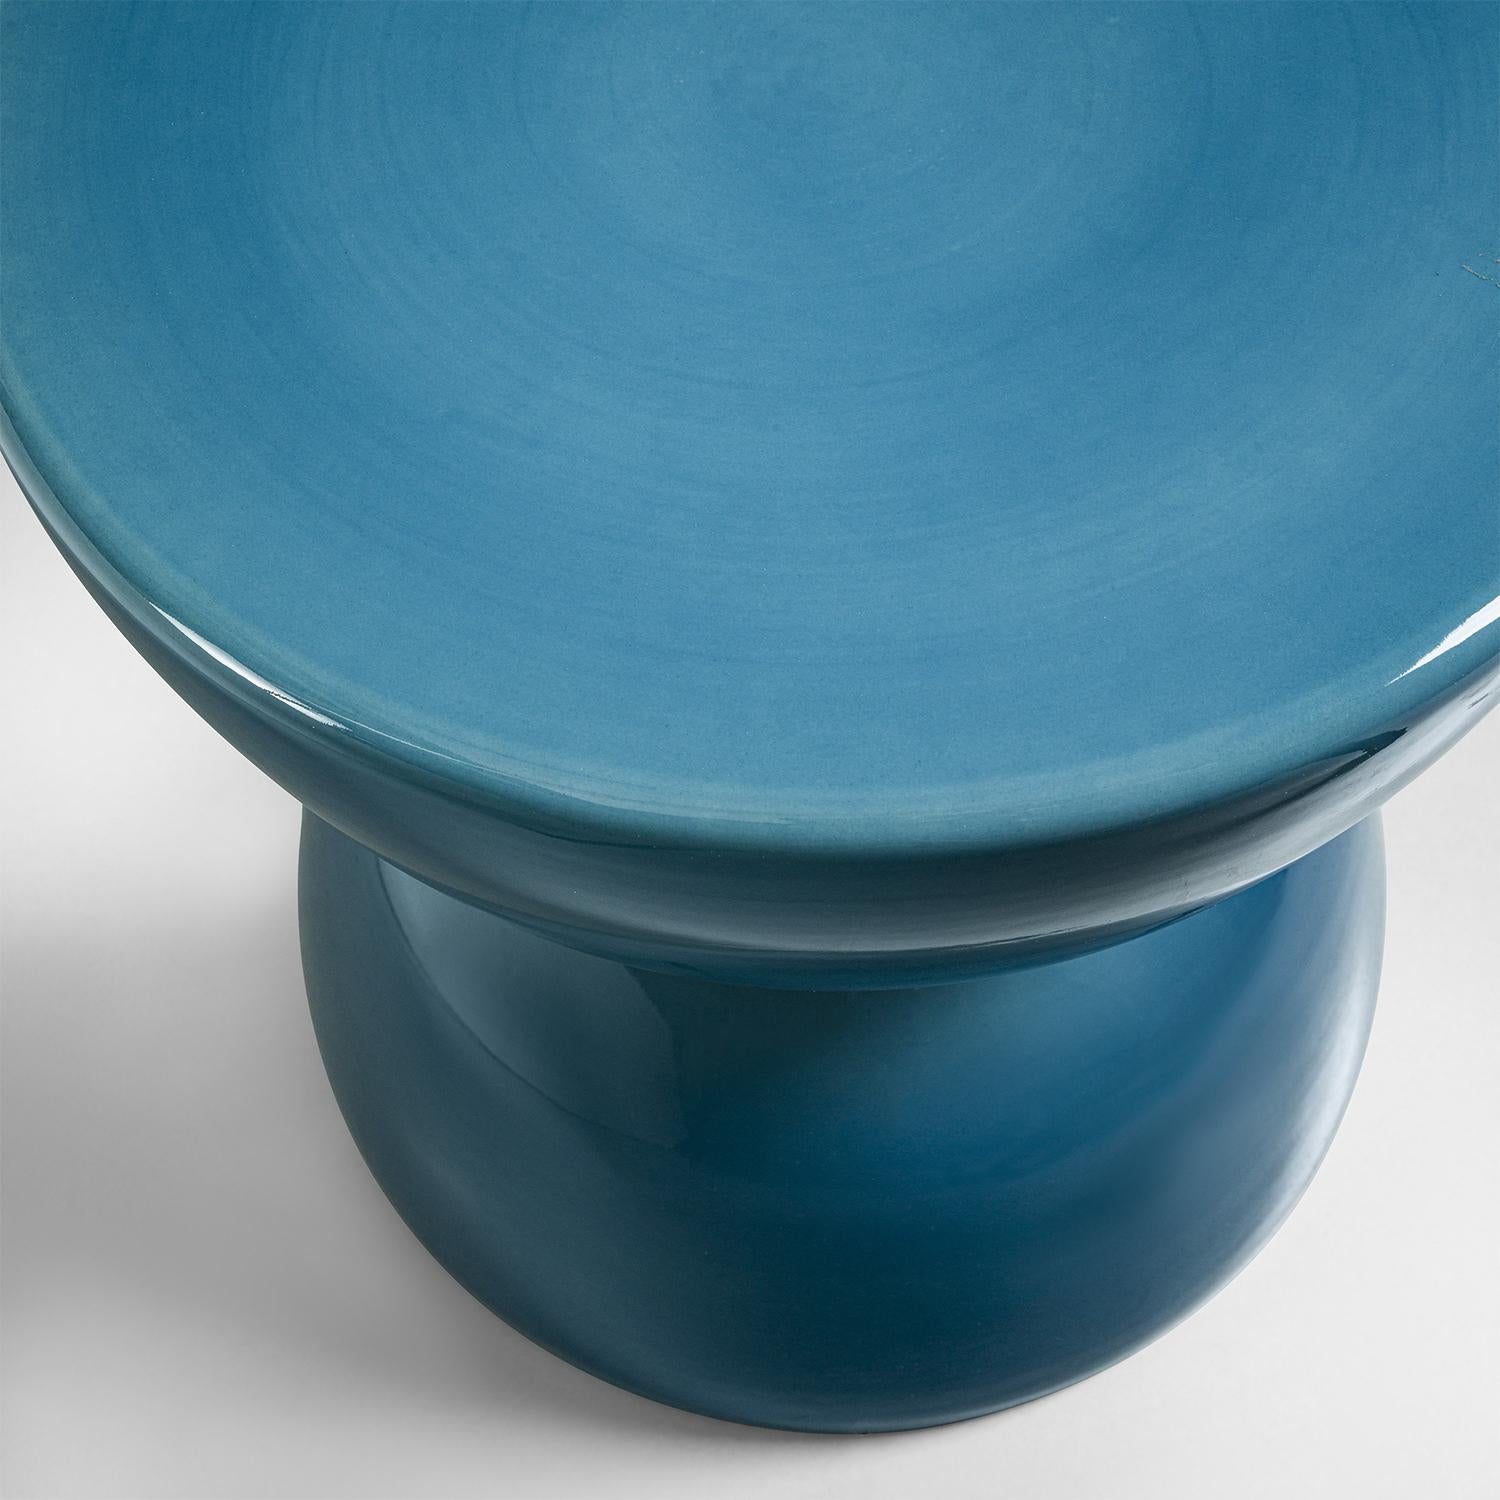 Ceramic Spheres Blue Stool For Sale